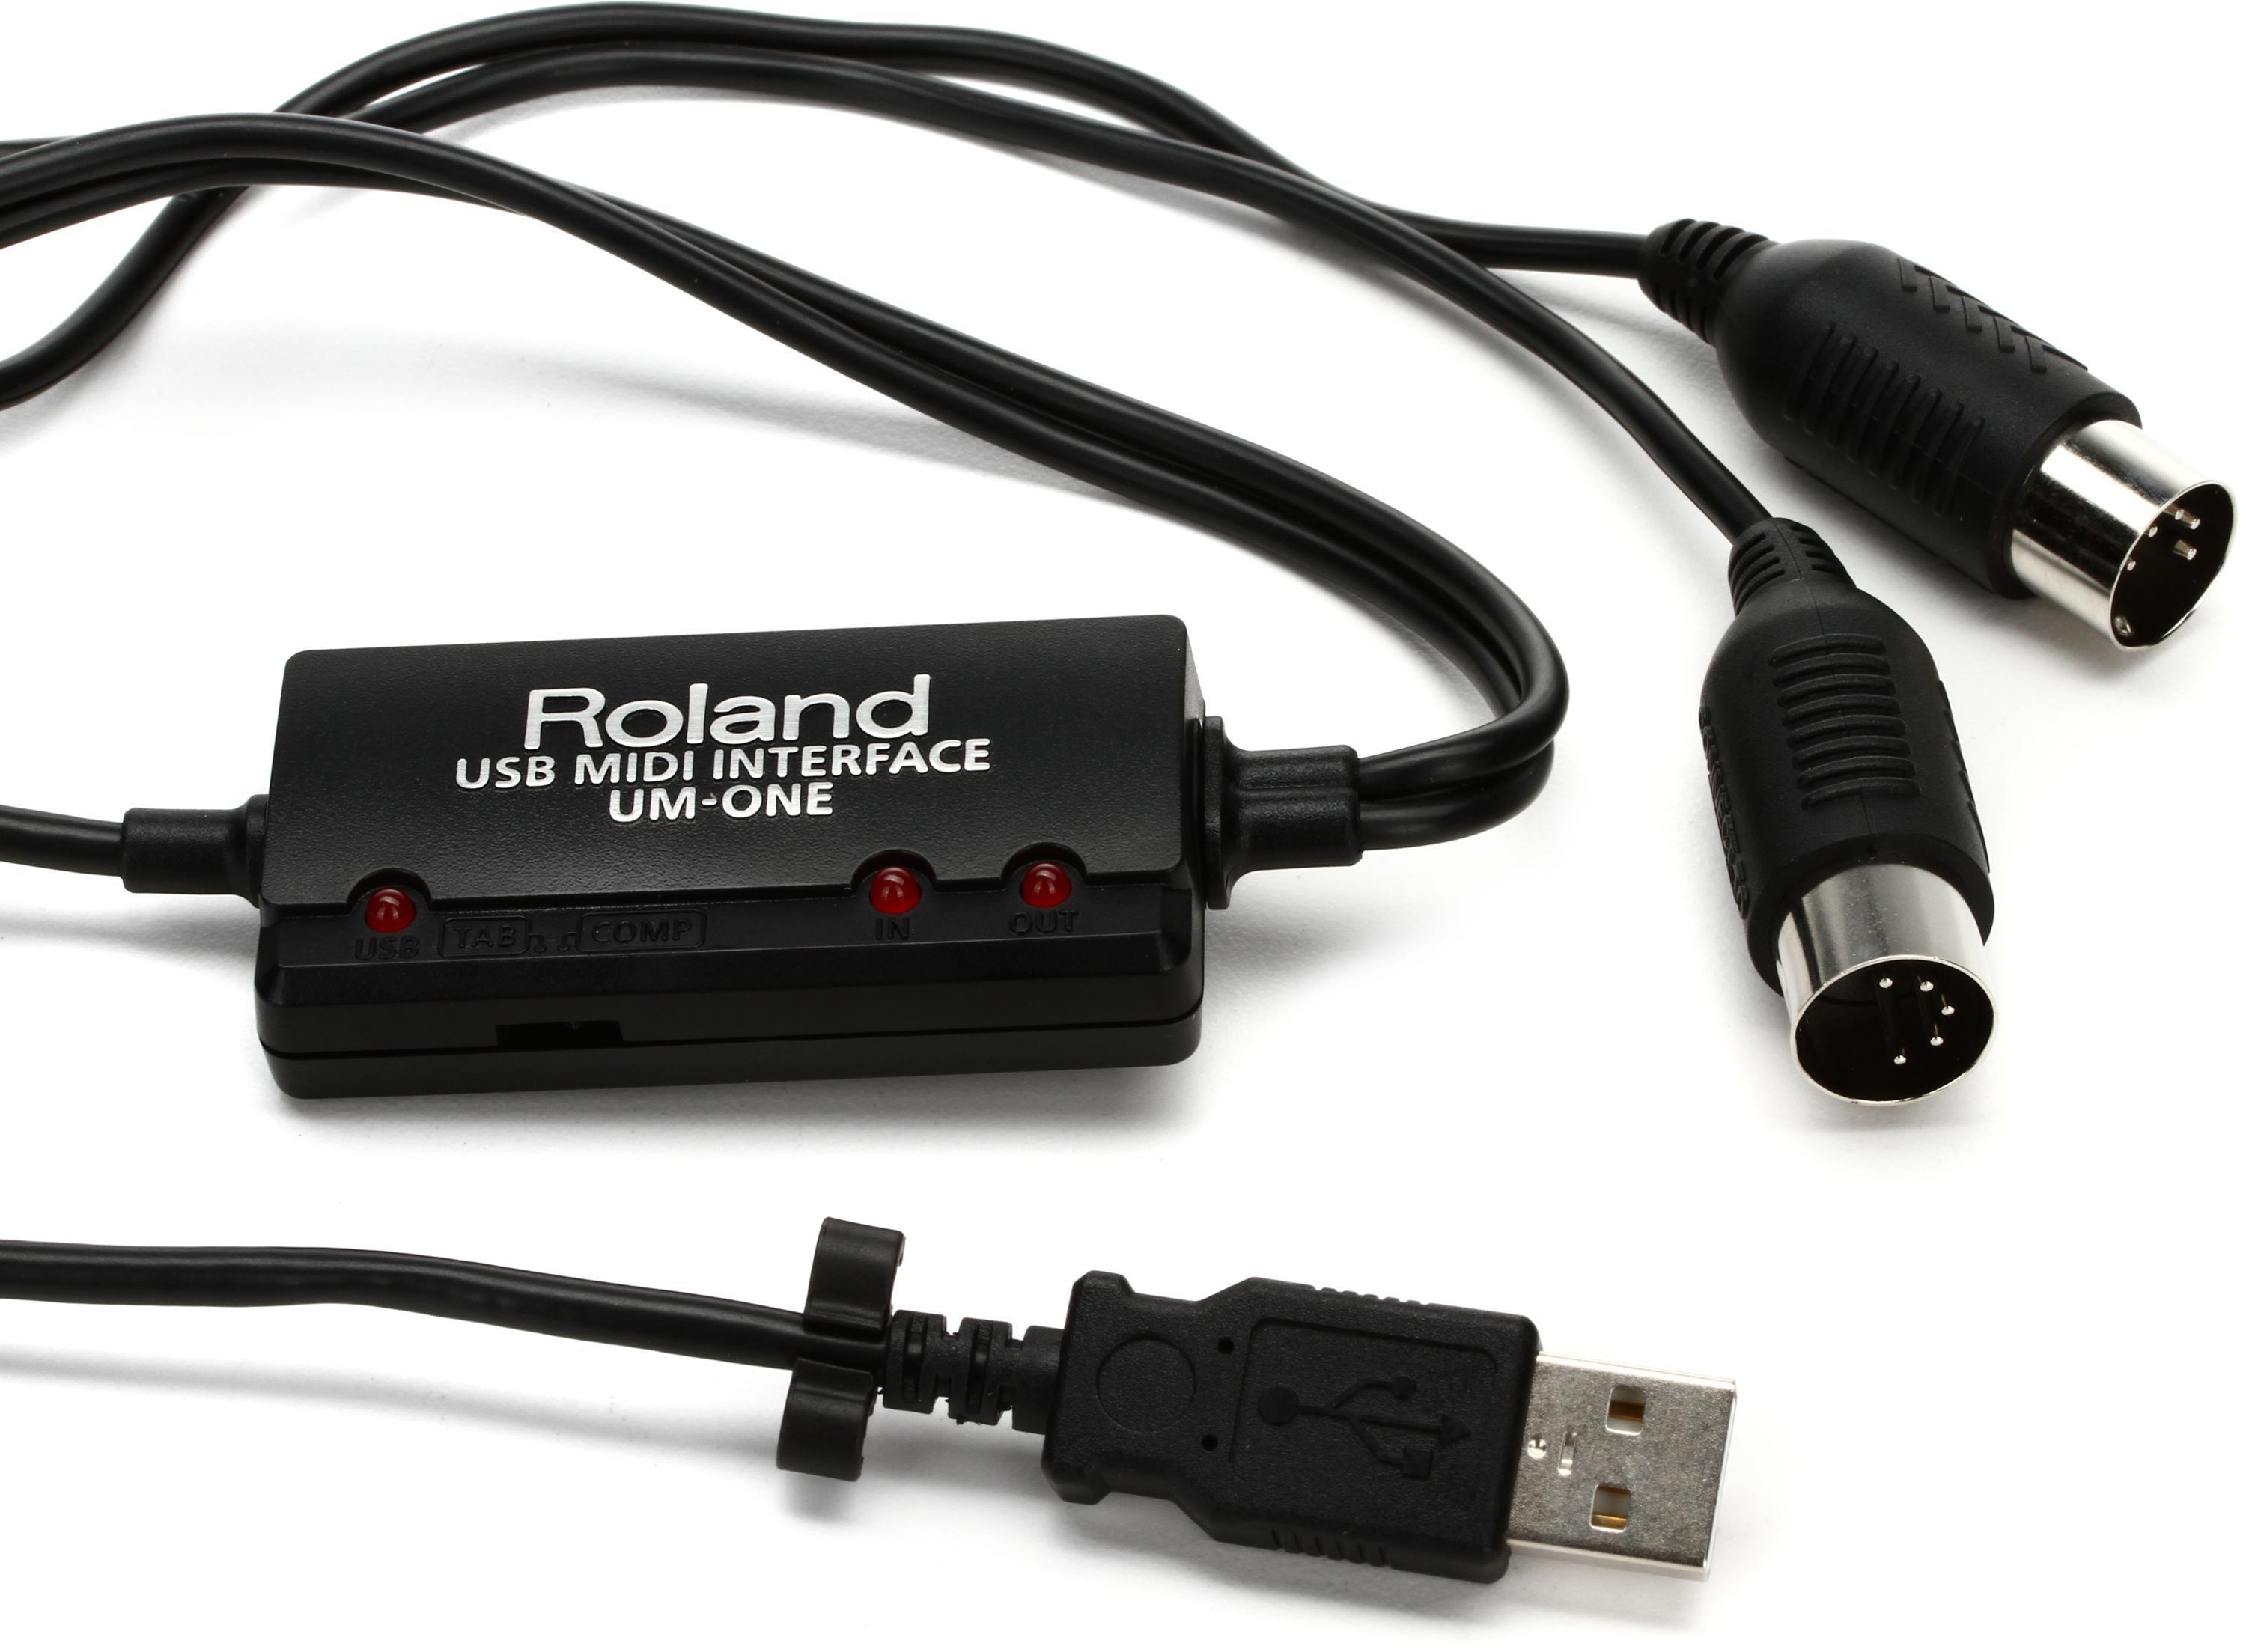 Roland UM-ONE mk2 USB MIDI Interface